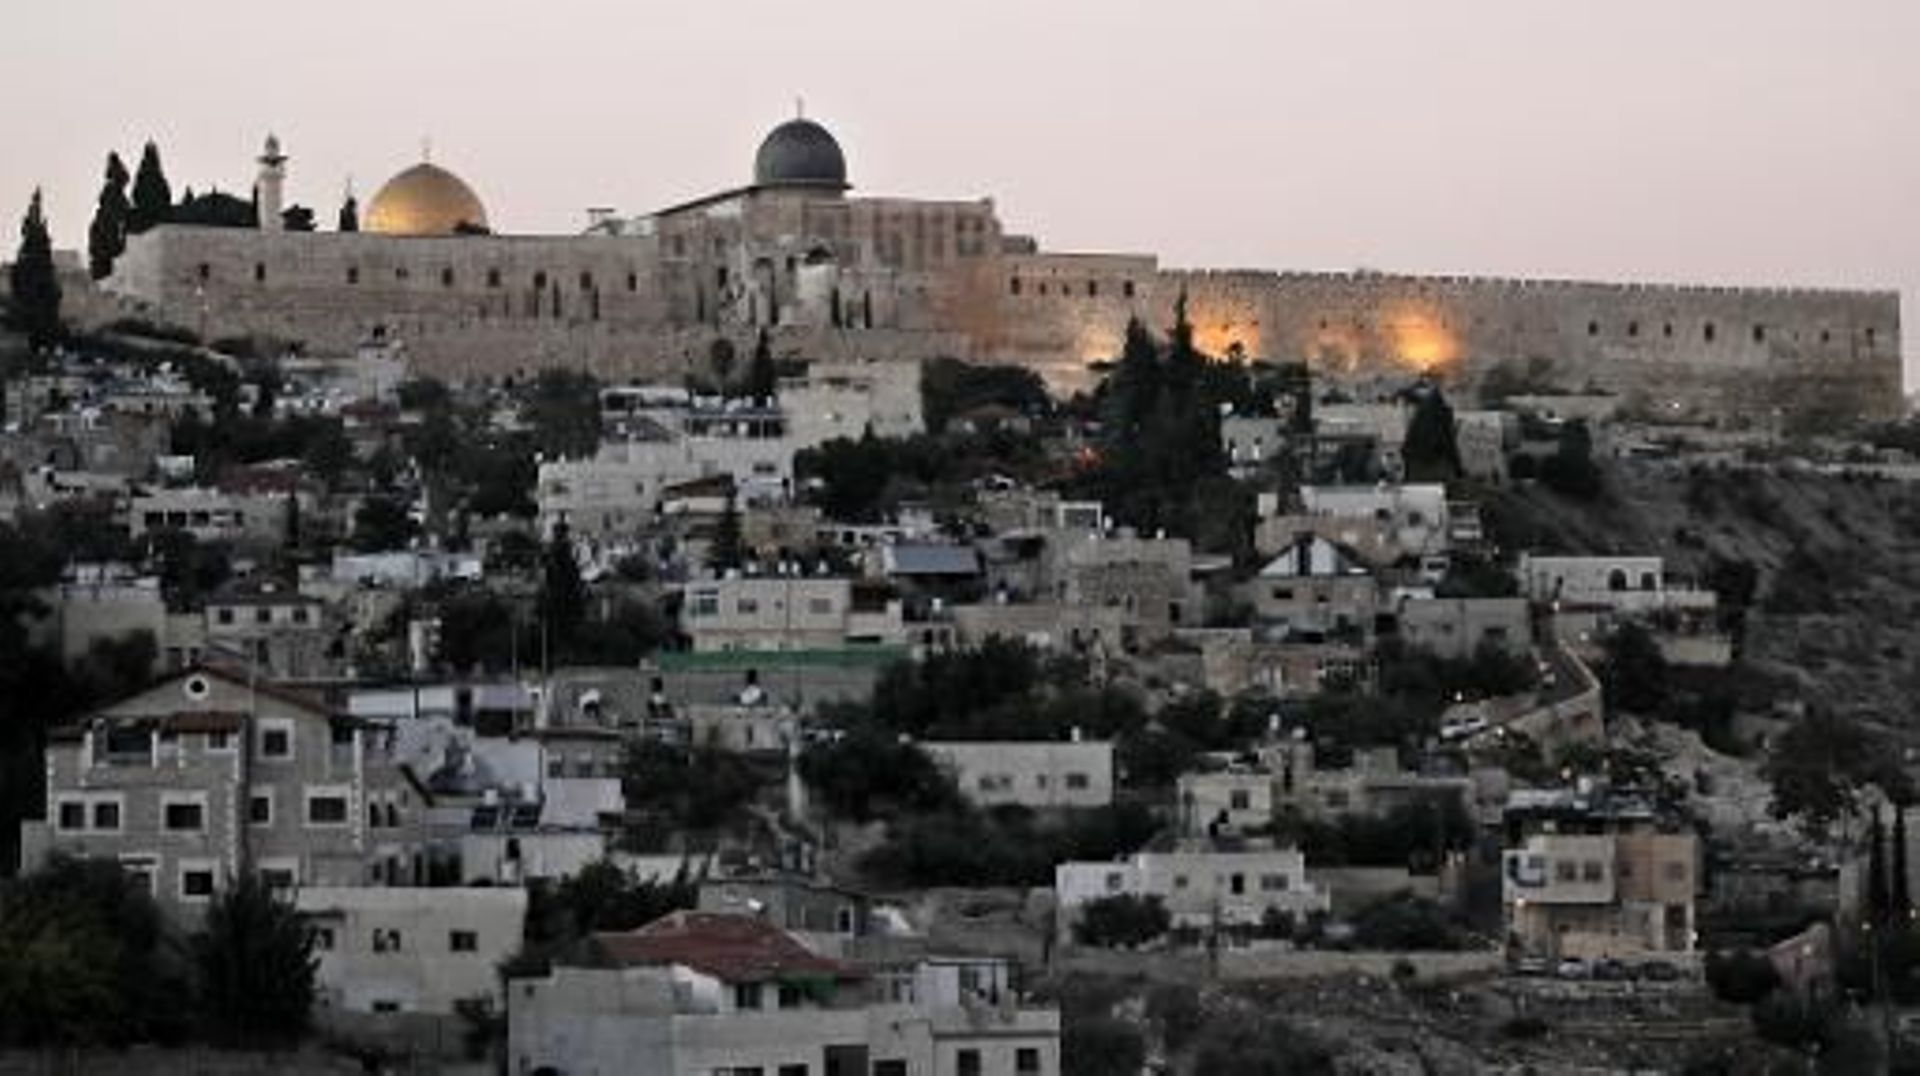 Jérusalem-Est: attaques contre l'installation de colons juifs